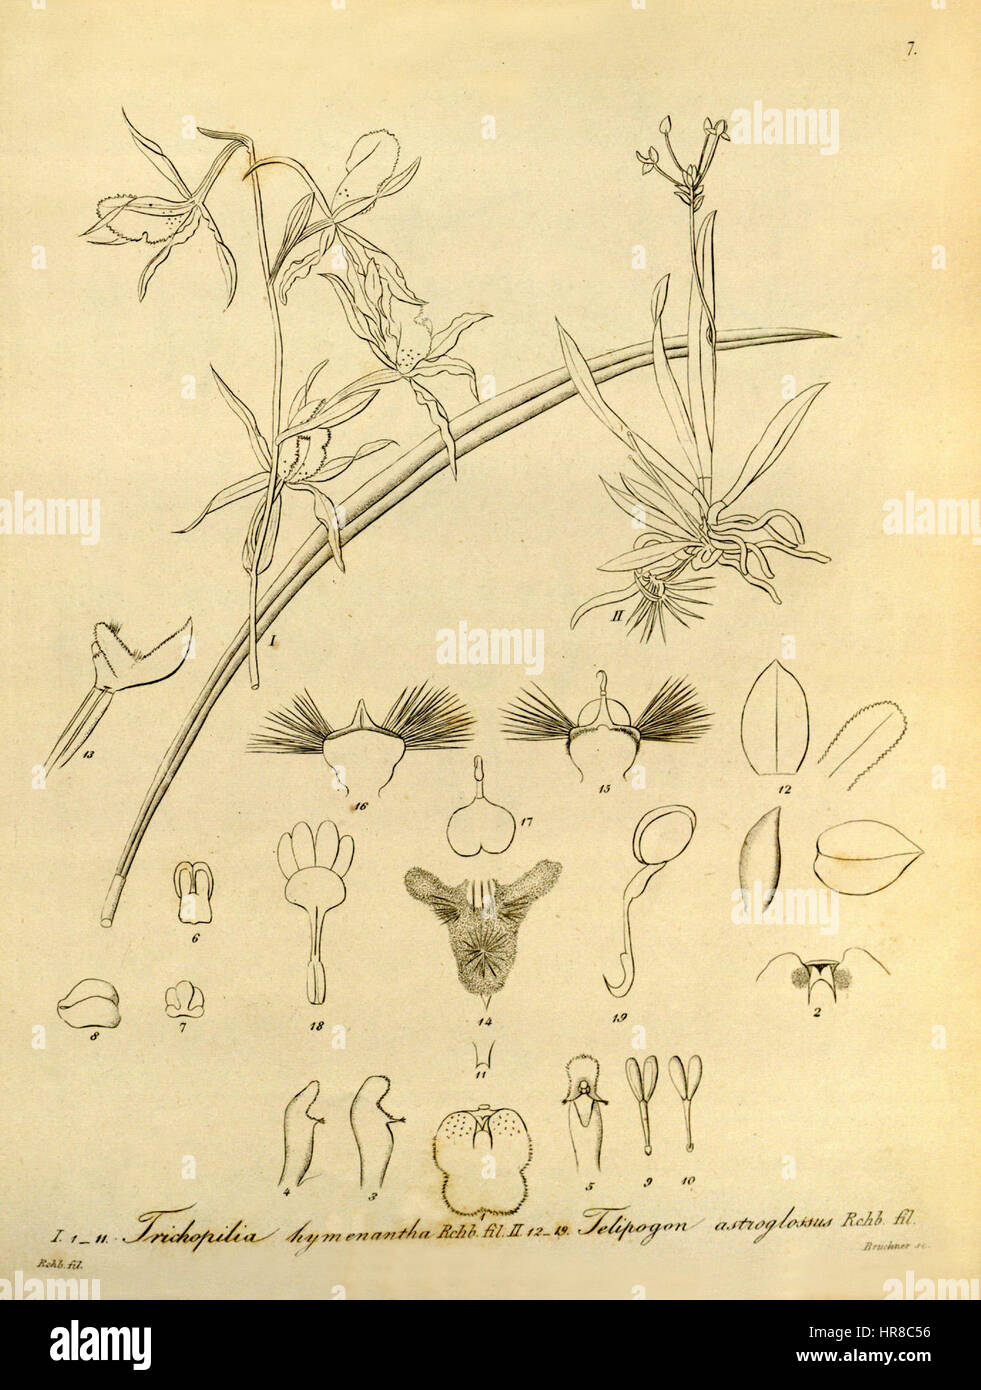 Trichopilia subulata (as Trichopilia hymenantha) and Telipogon astroglossus - Xenia vol 1 pl 7 (1858) Stock Photo